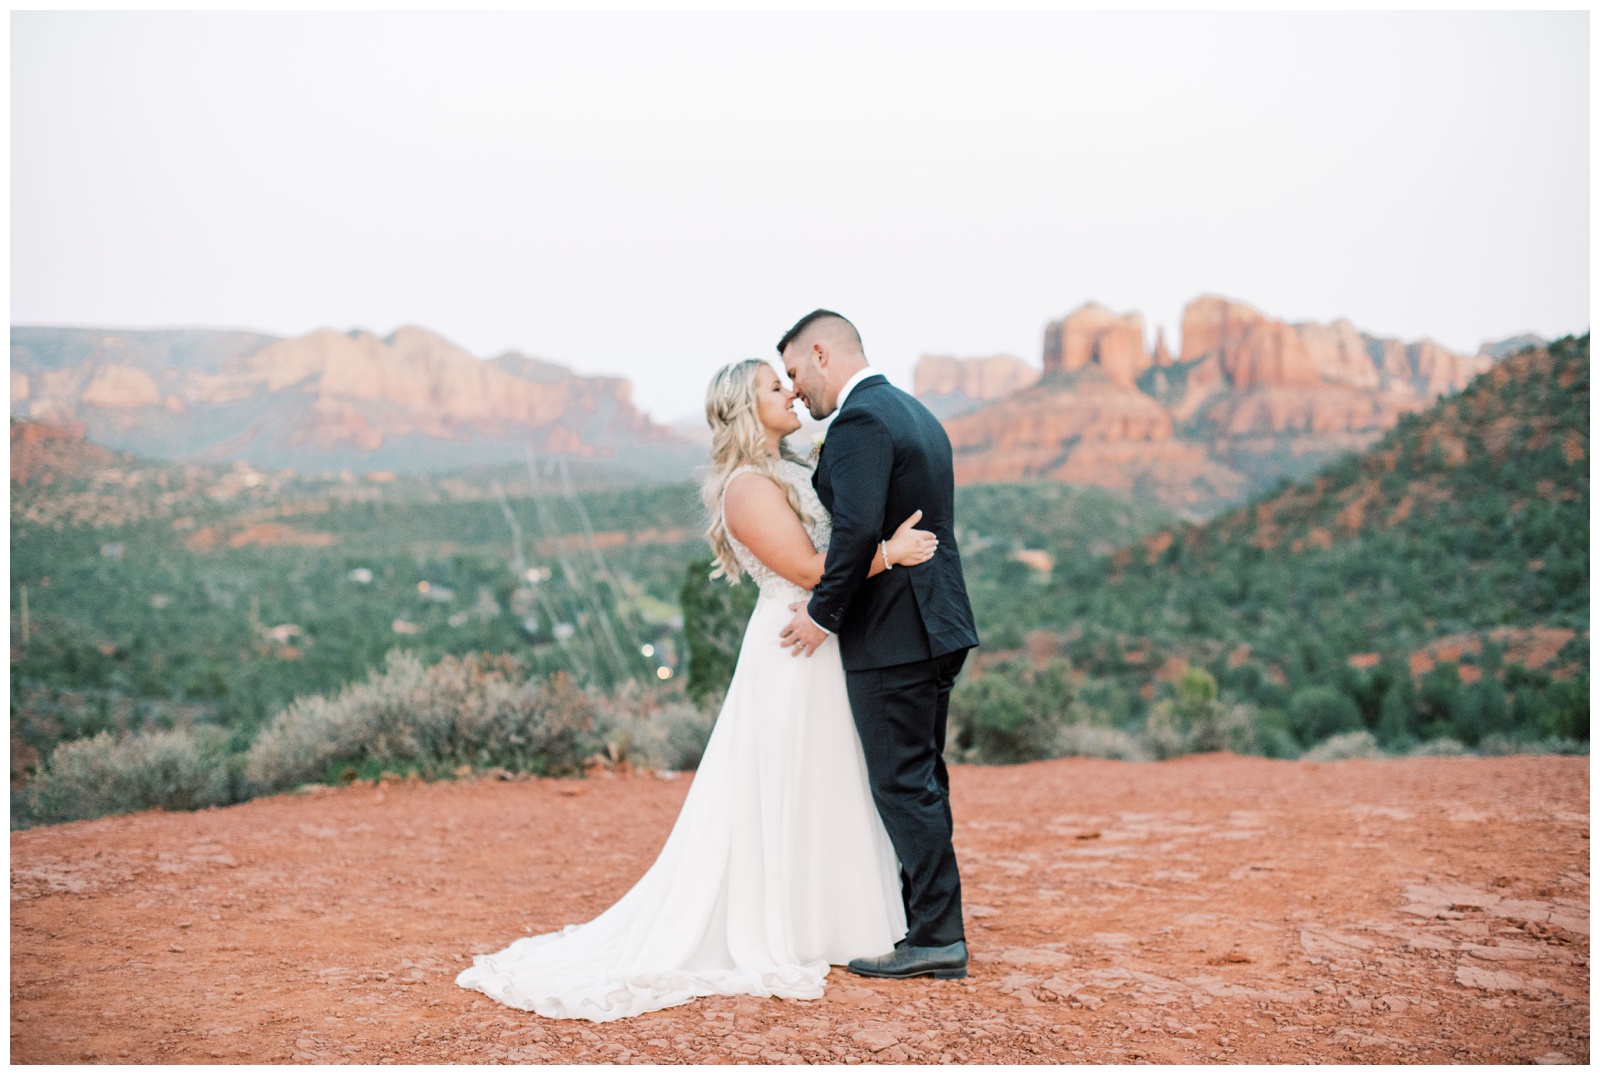 Kim & Nick, Destination Wedding at Cathedral Rock, Sedona, Arizona